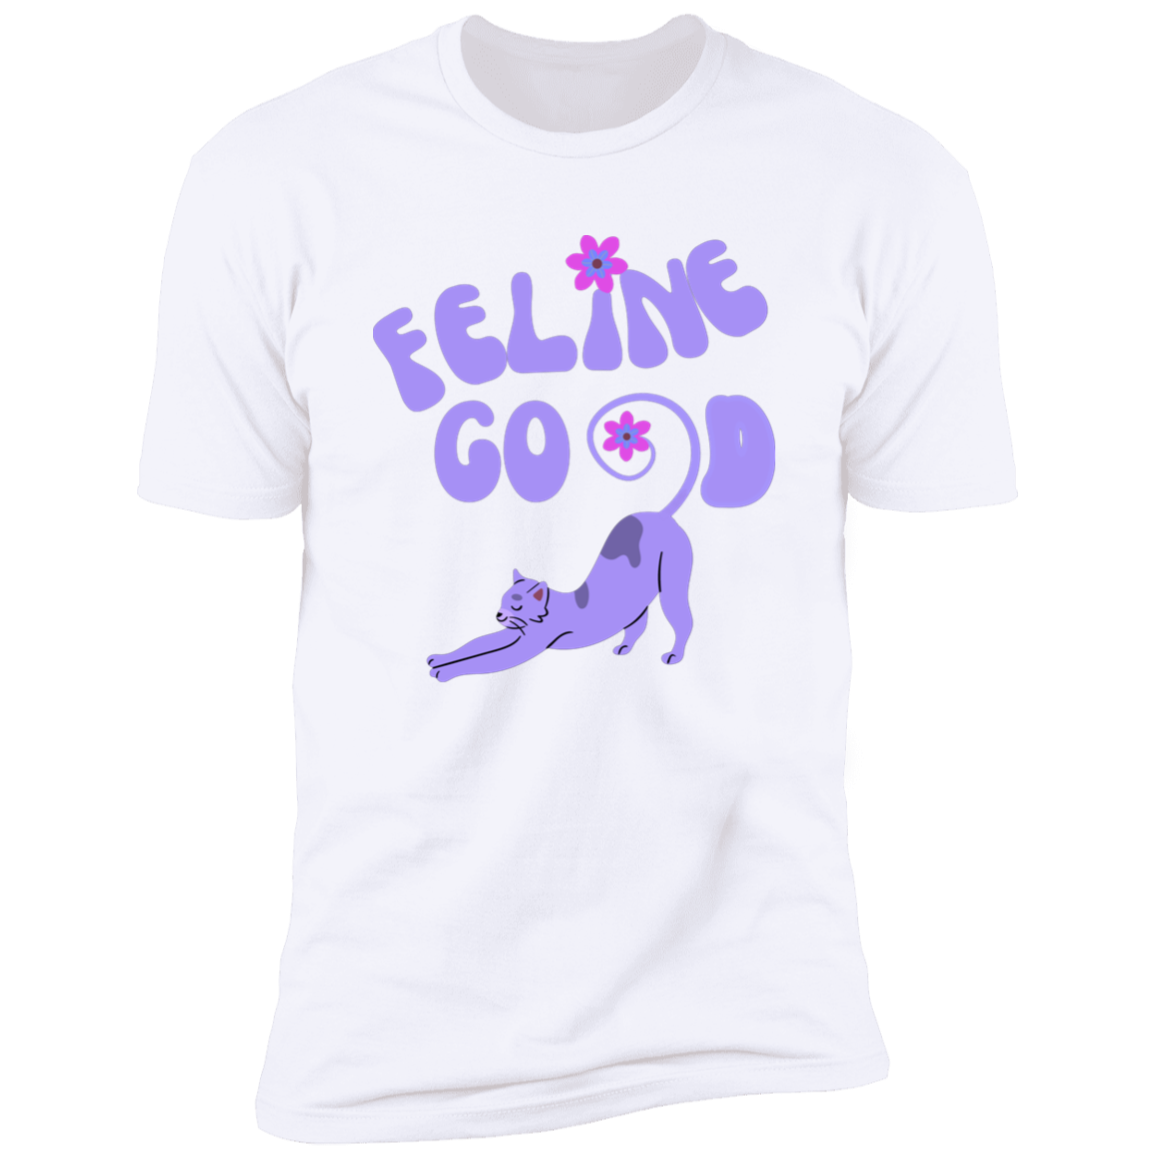 Feline Good Cat T-Shirt, Cat Shirt for humans, in whte